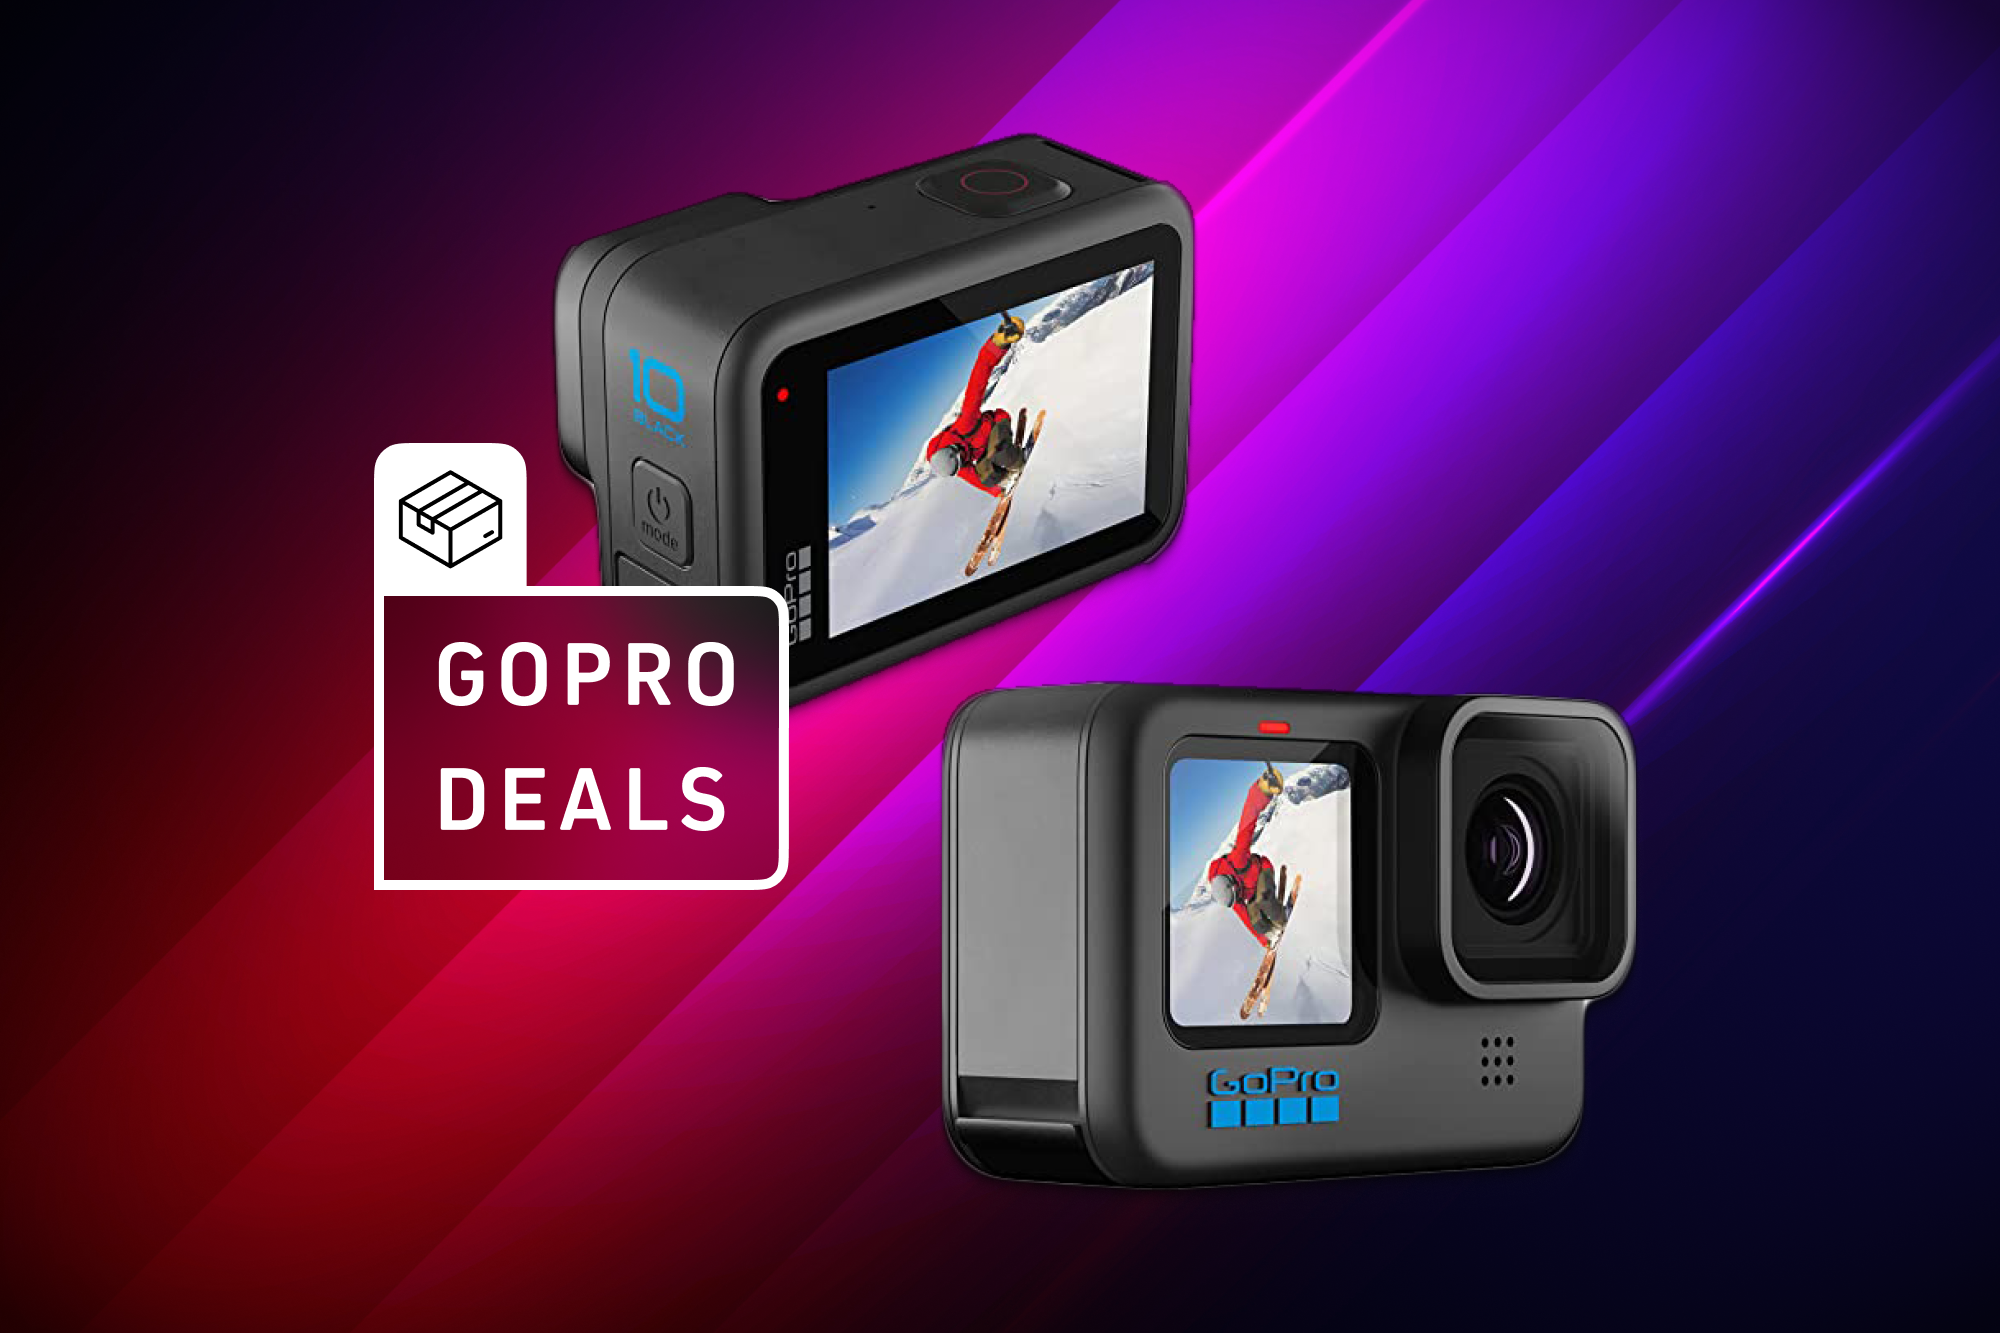 Buy GoPro Hero 10 Action Camera Bundle, Black Online at Best